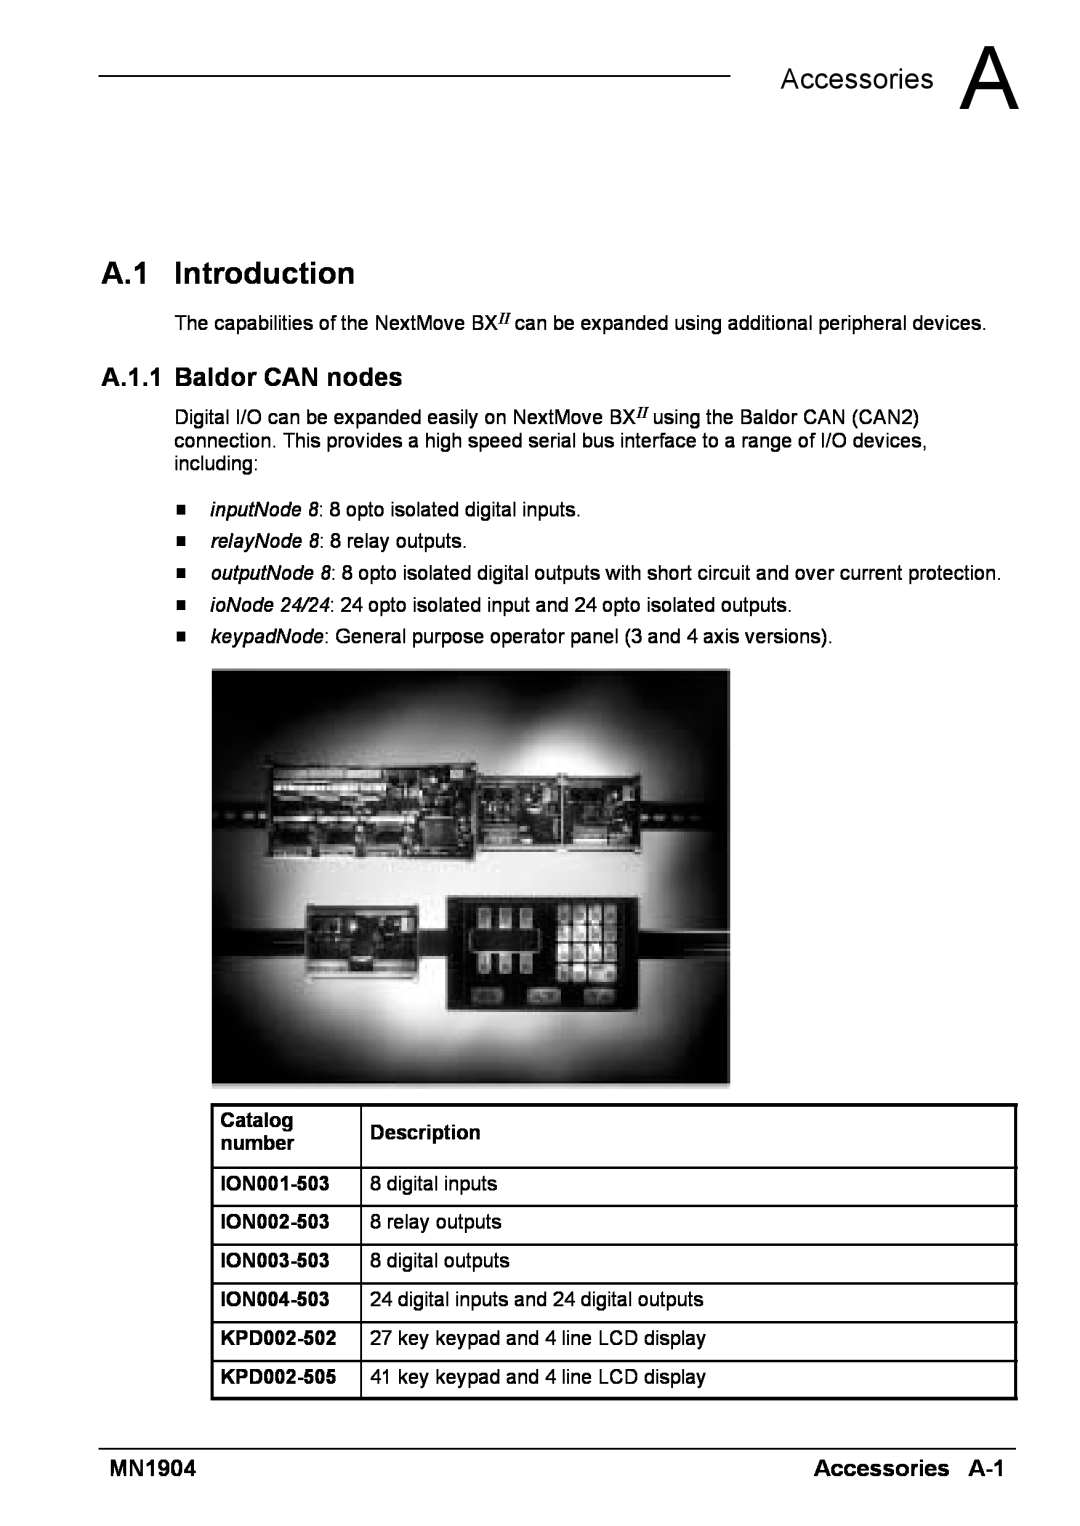 Baldor BXII installation manual A.1 Introduction, A Accessories A, A.1.1 Baldor CAN nodes 